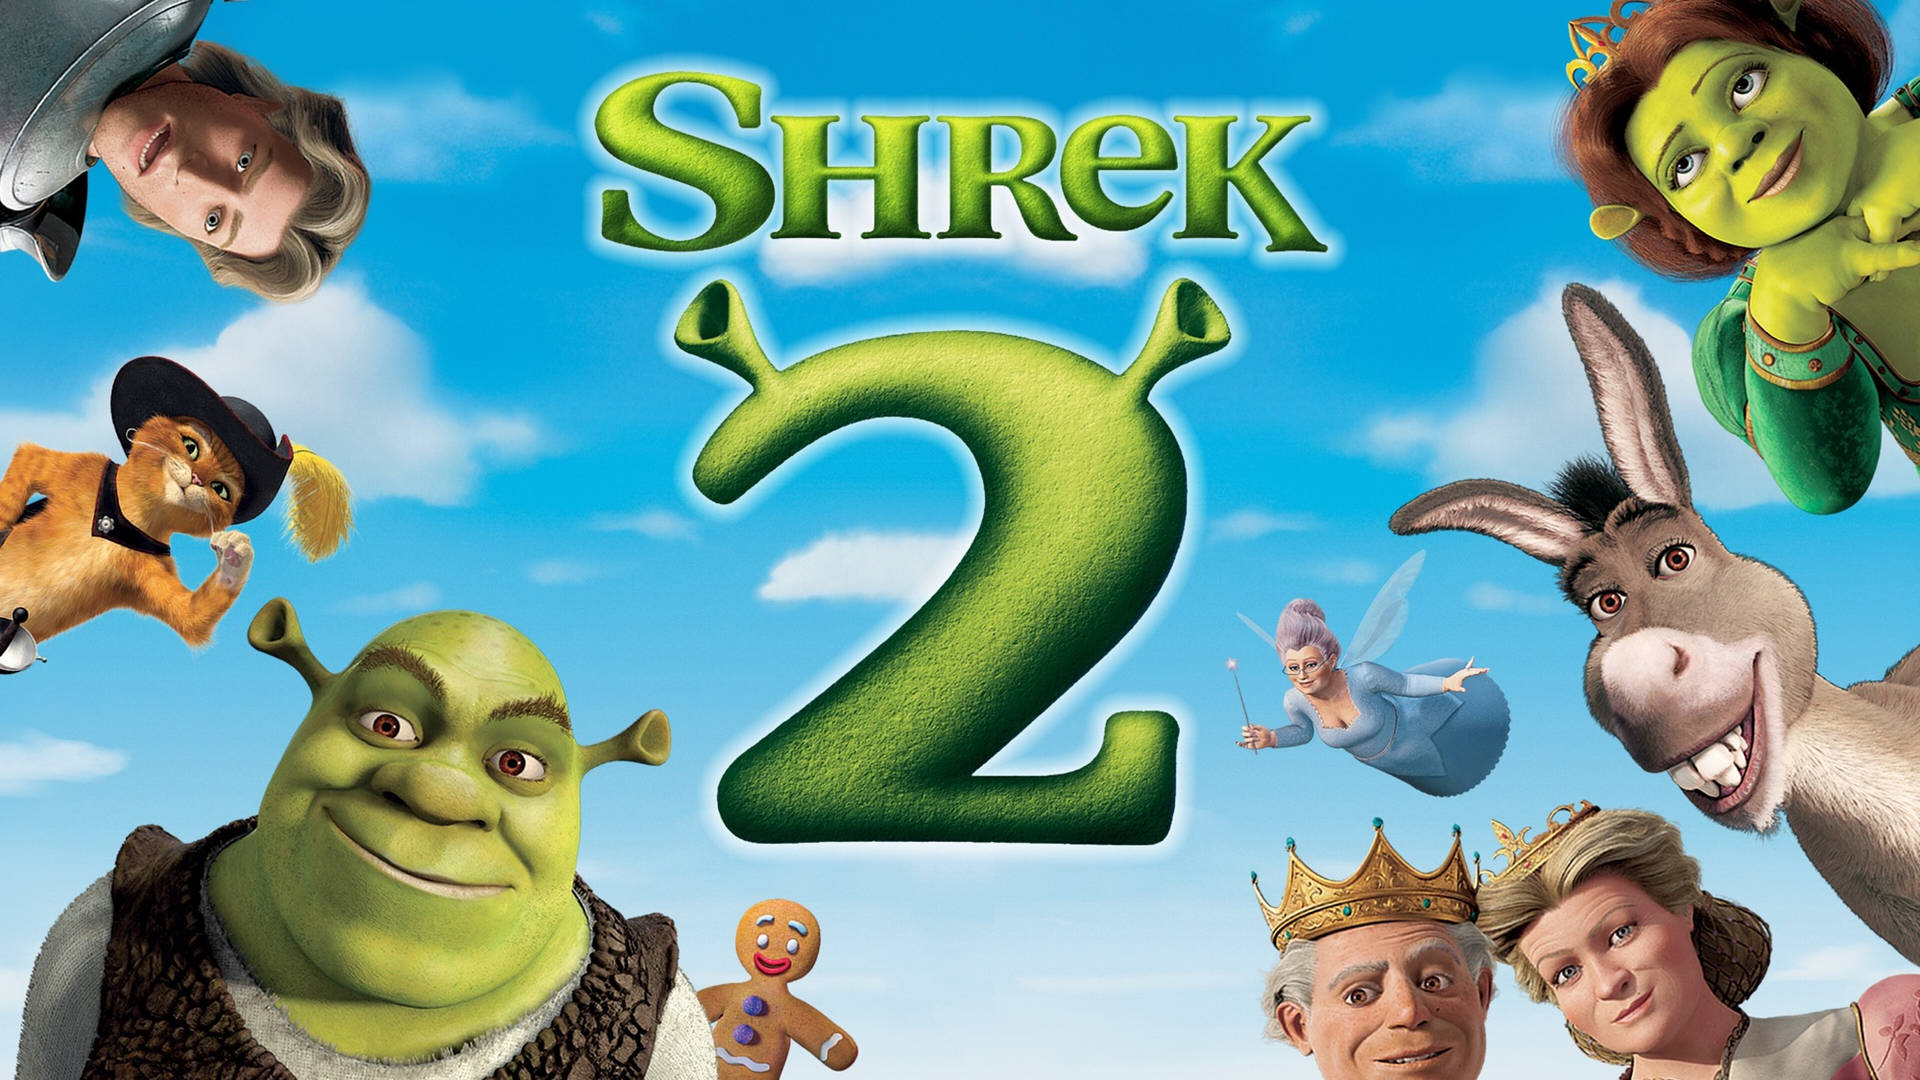 Top 999+ Shrek 2 Wallpaper Full HD, 4K✅Free to Use